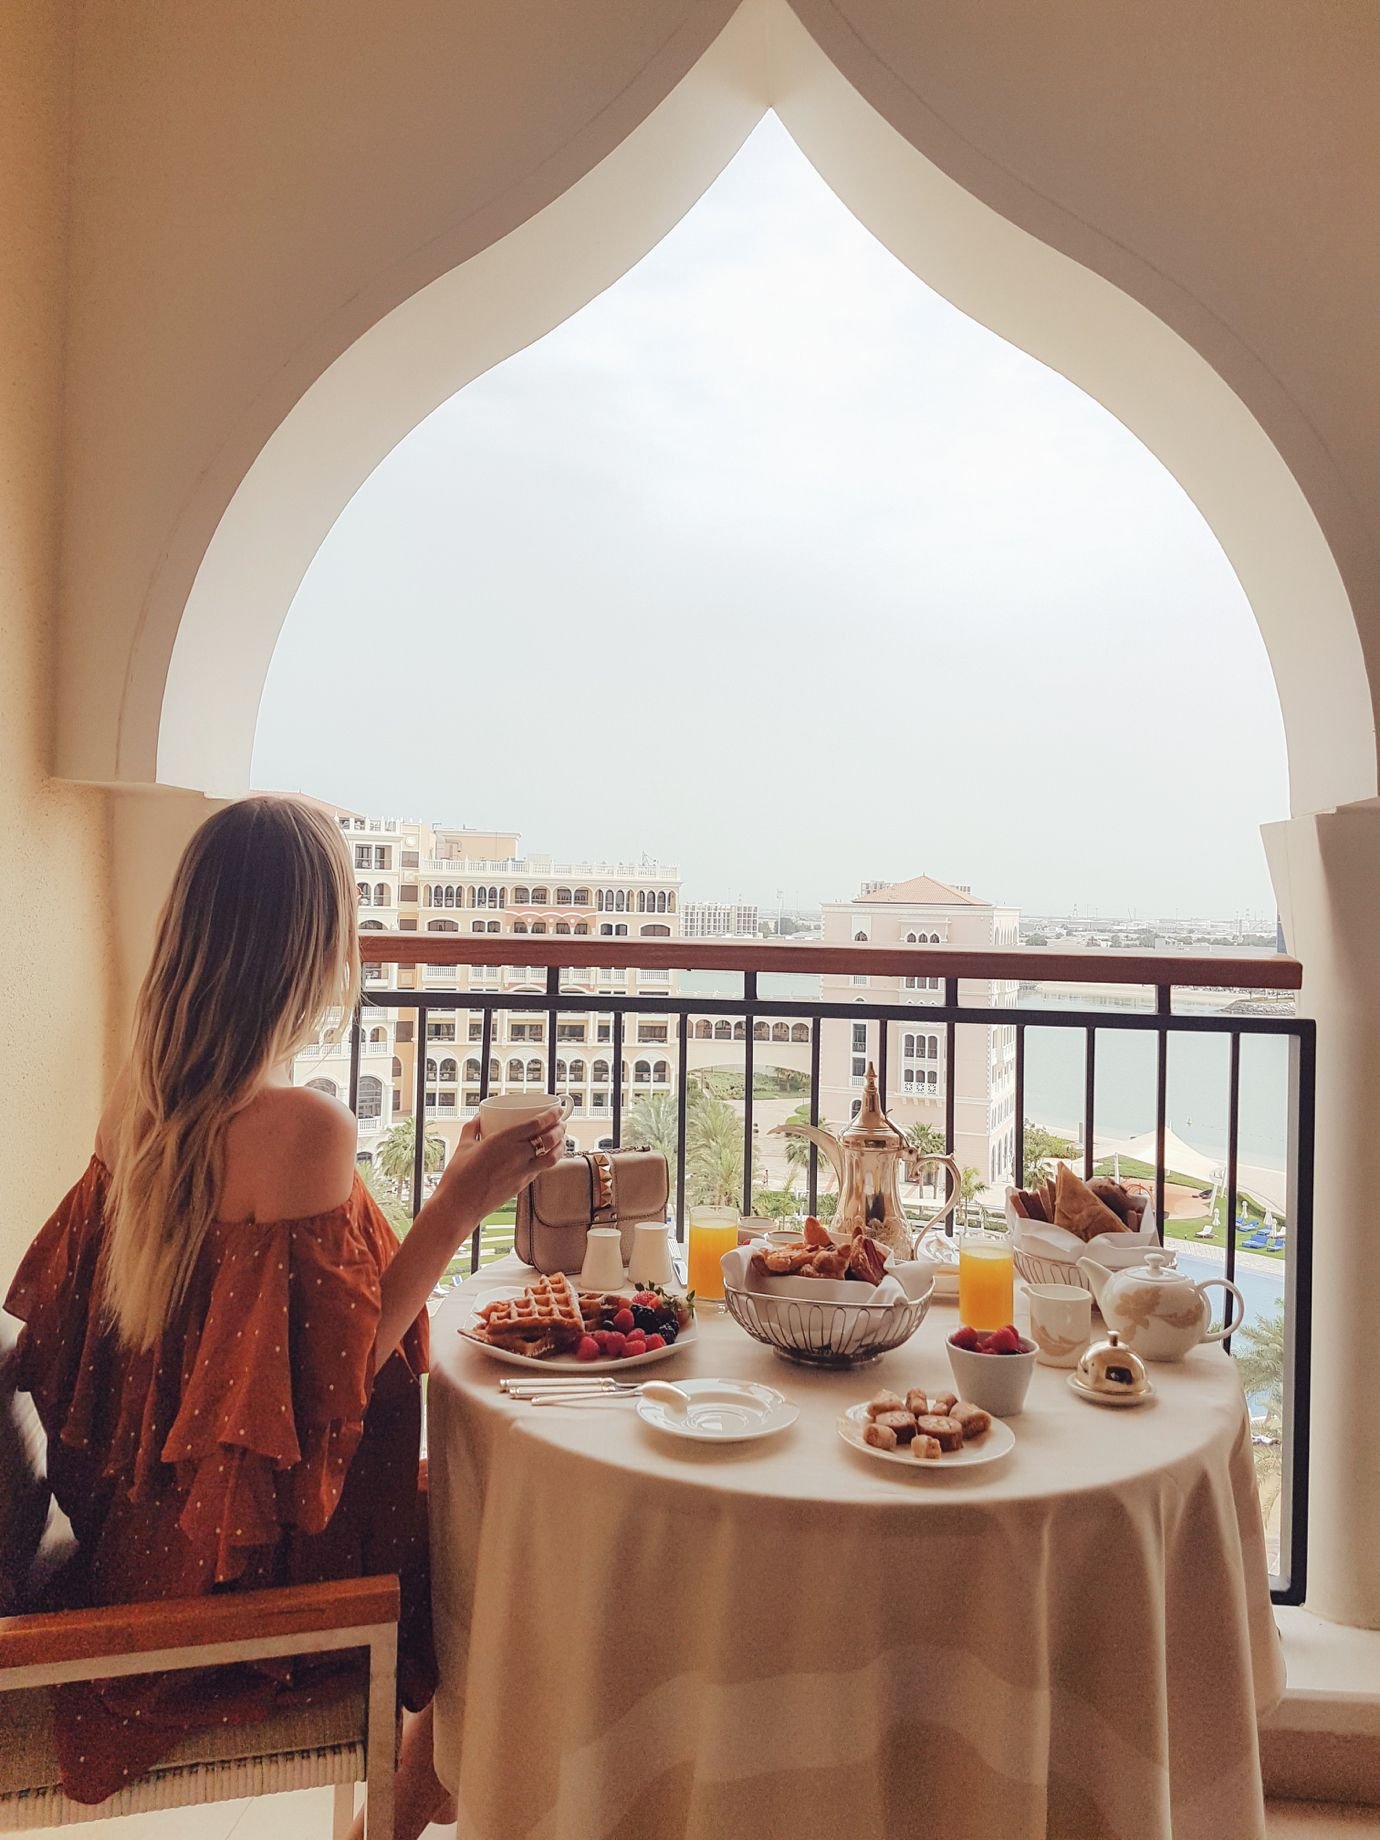 Завтрак в дубае. Завтрак Palace Абу Даби. Завтрак с жирафом Абу Даби. Завтрак в Эмиратах. Красивый завтрак в Дубае.